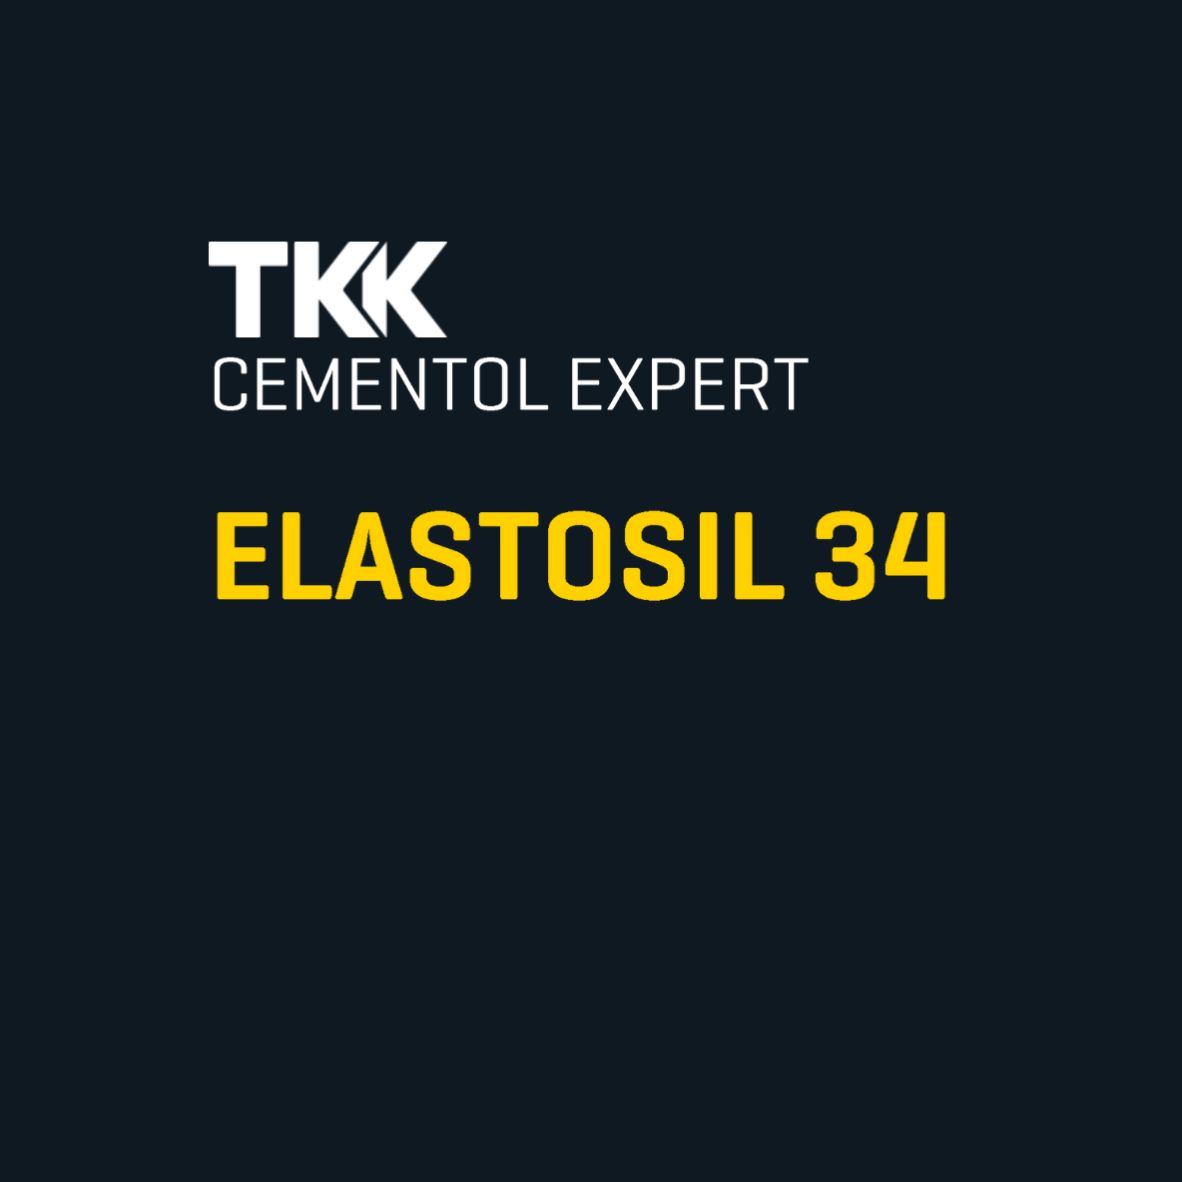 Cementol Expert Elastosil 34